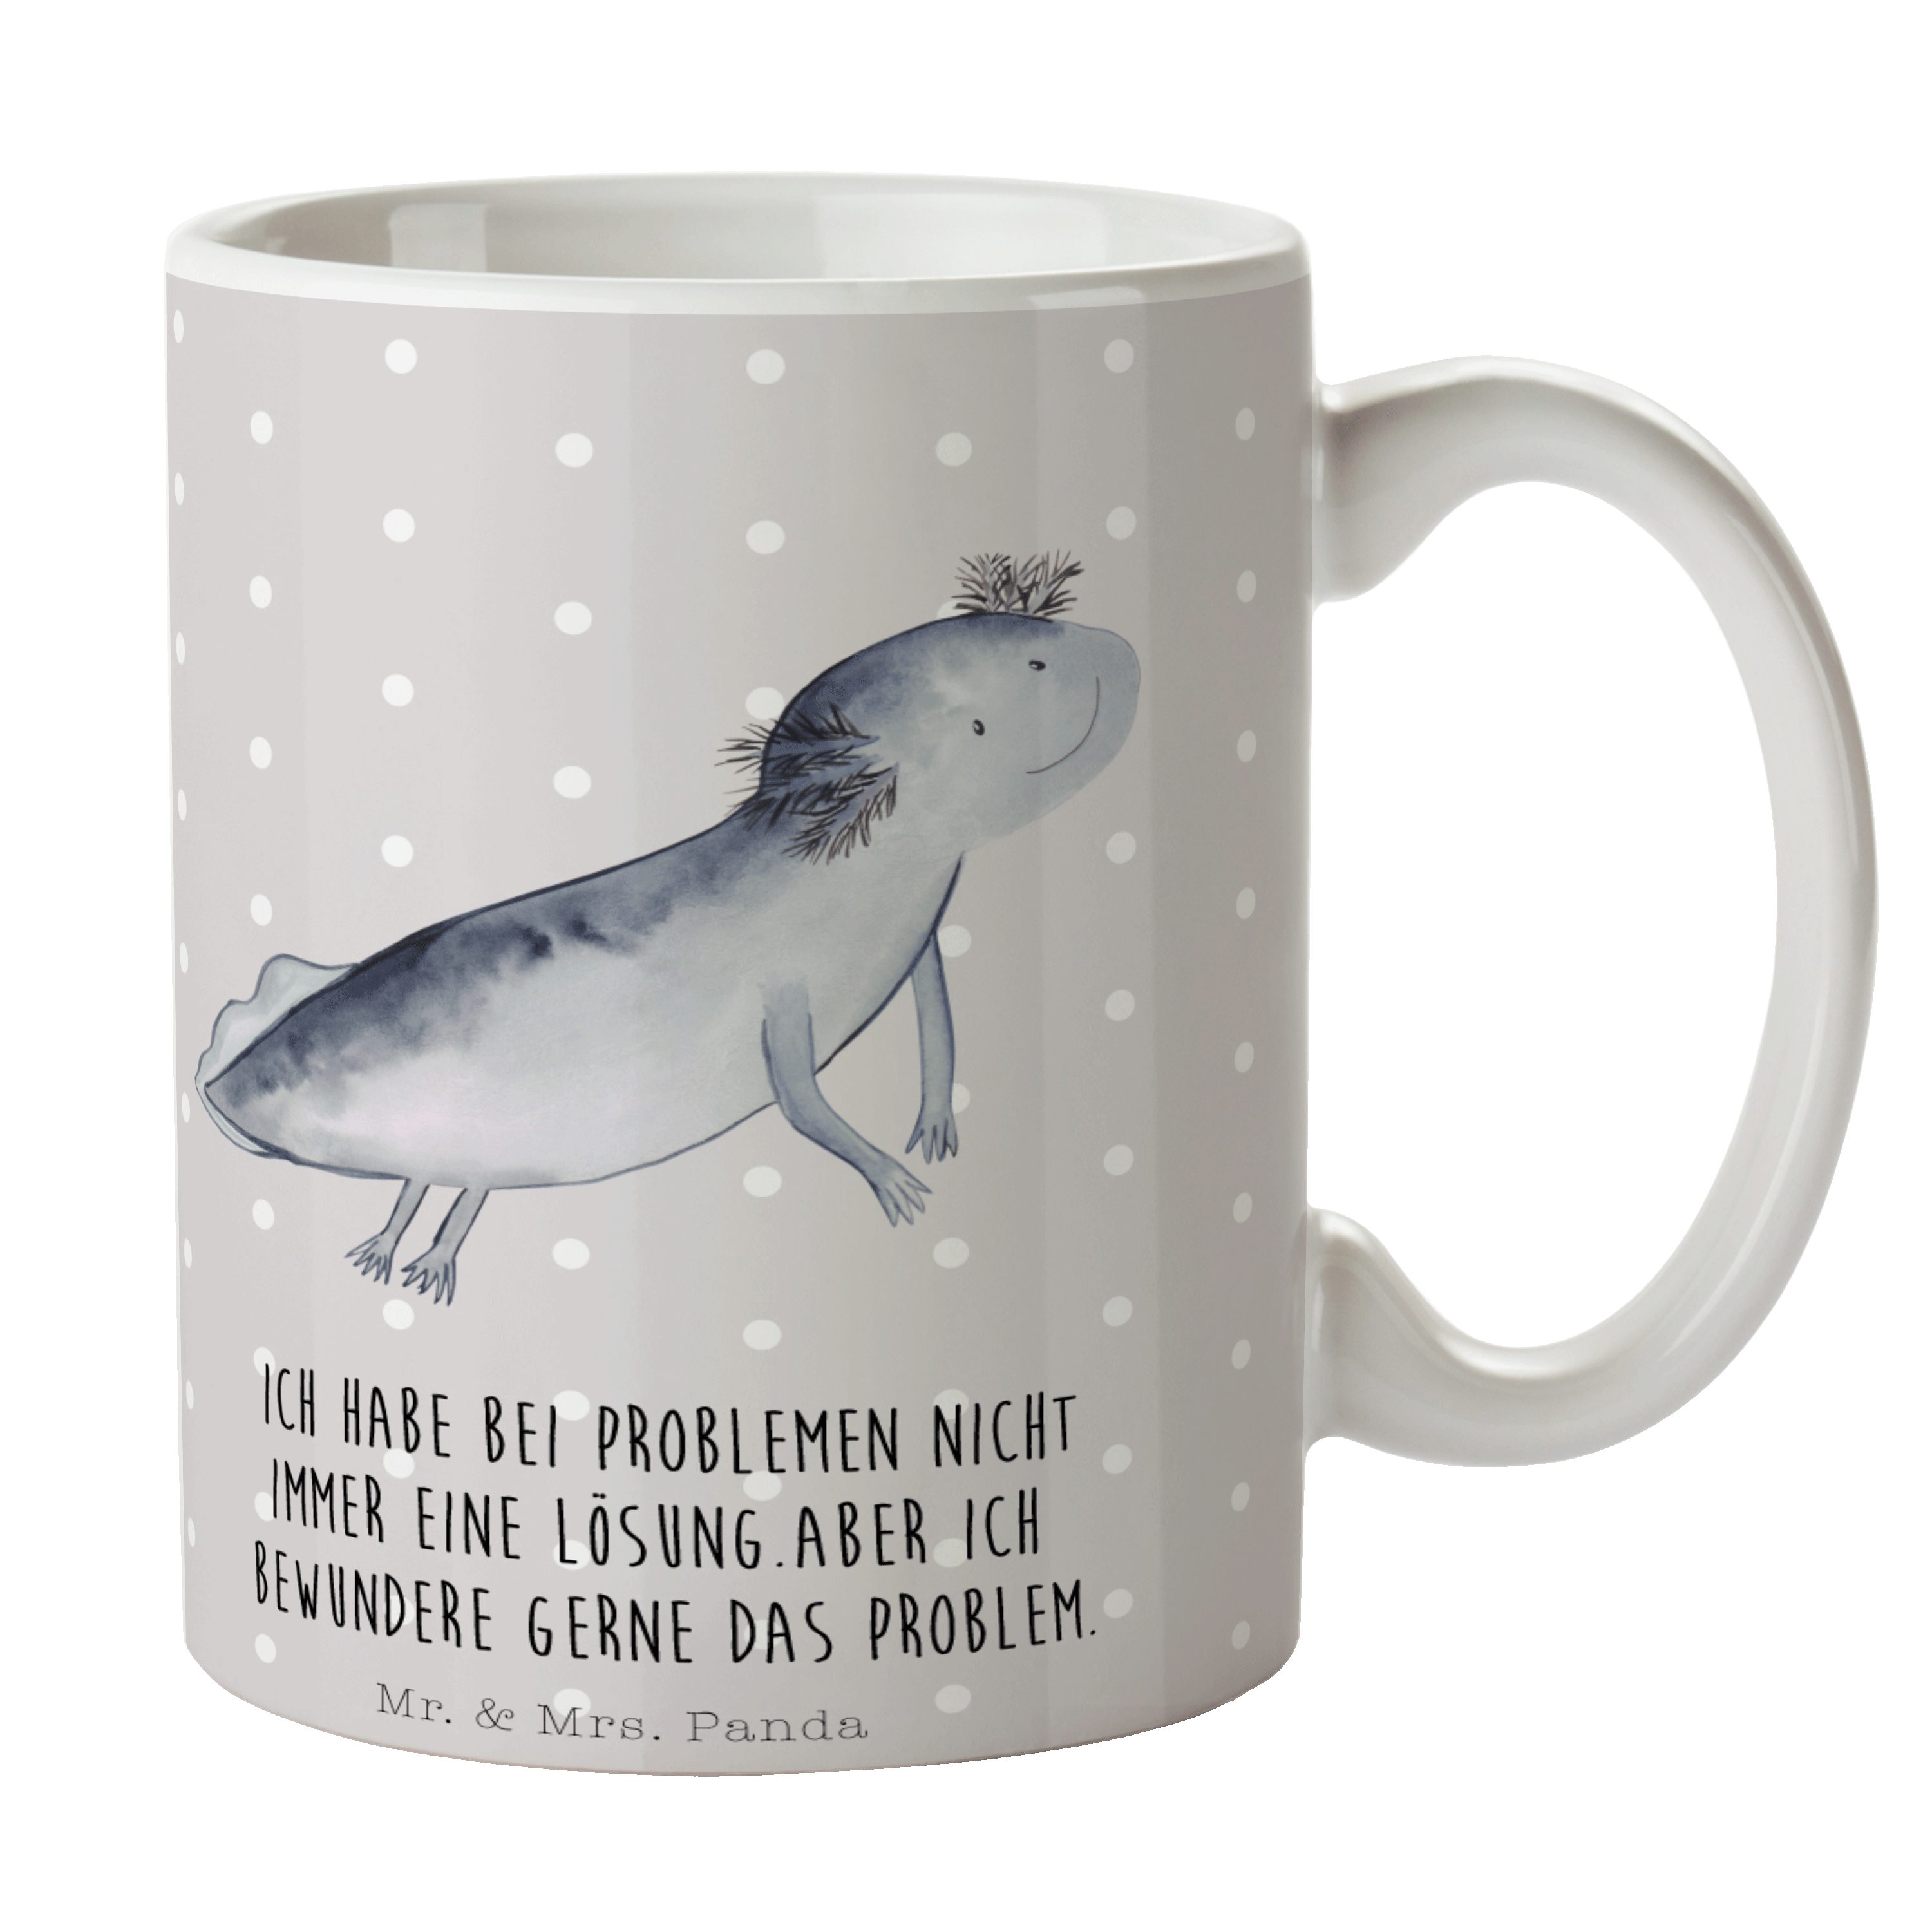 Mr. & Mrs. Panda Tasse Axolotl schwimmt - Grau Pastell - Geschenk, Geschenk Tasse, Tasse, Sc, Keramik